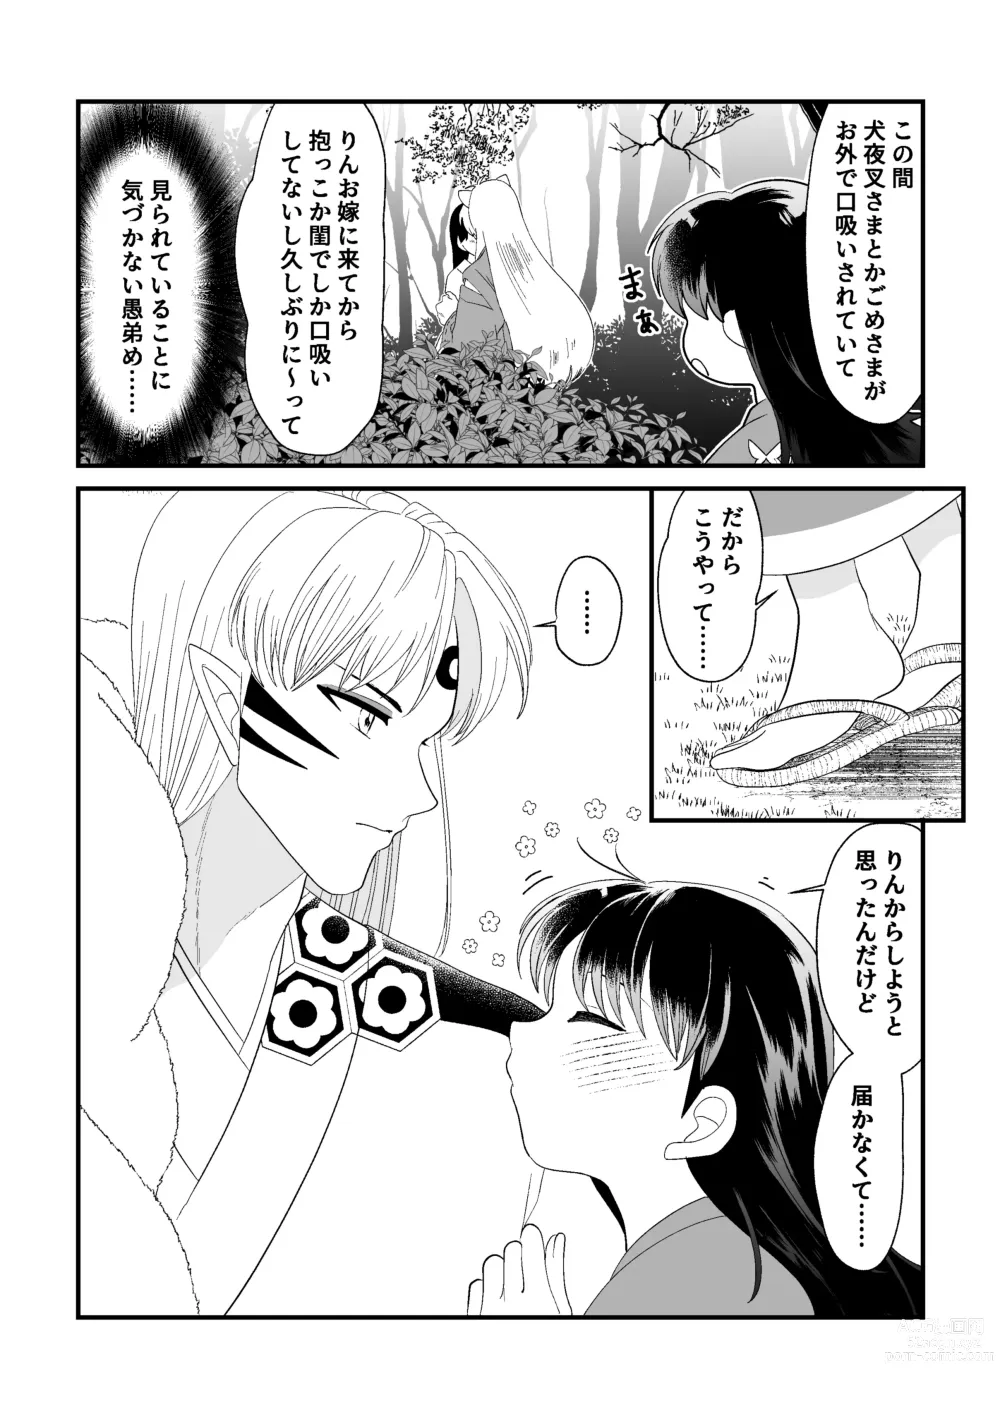 Page 6 of doujinshi Tatoe Sekai ga Chigatte mo